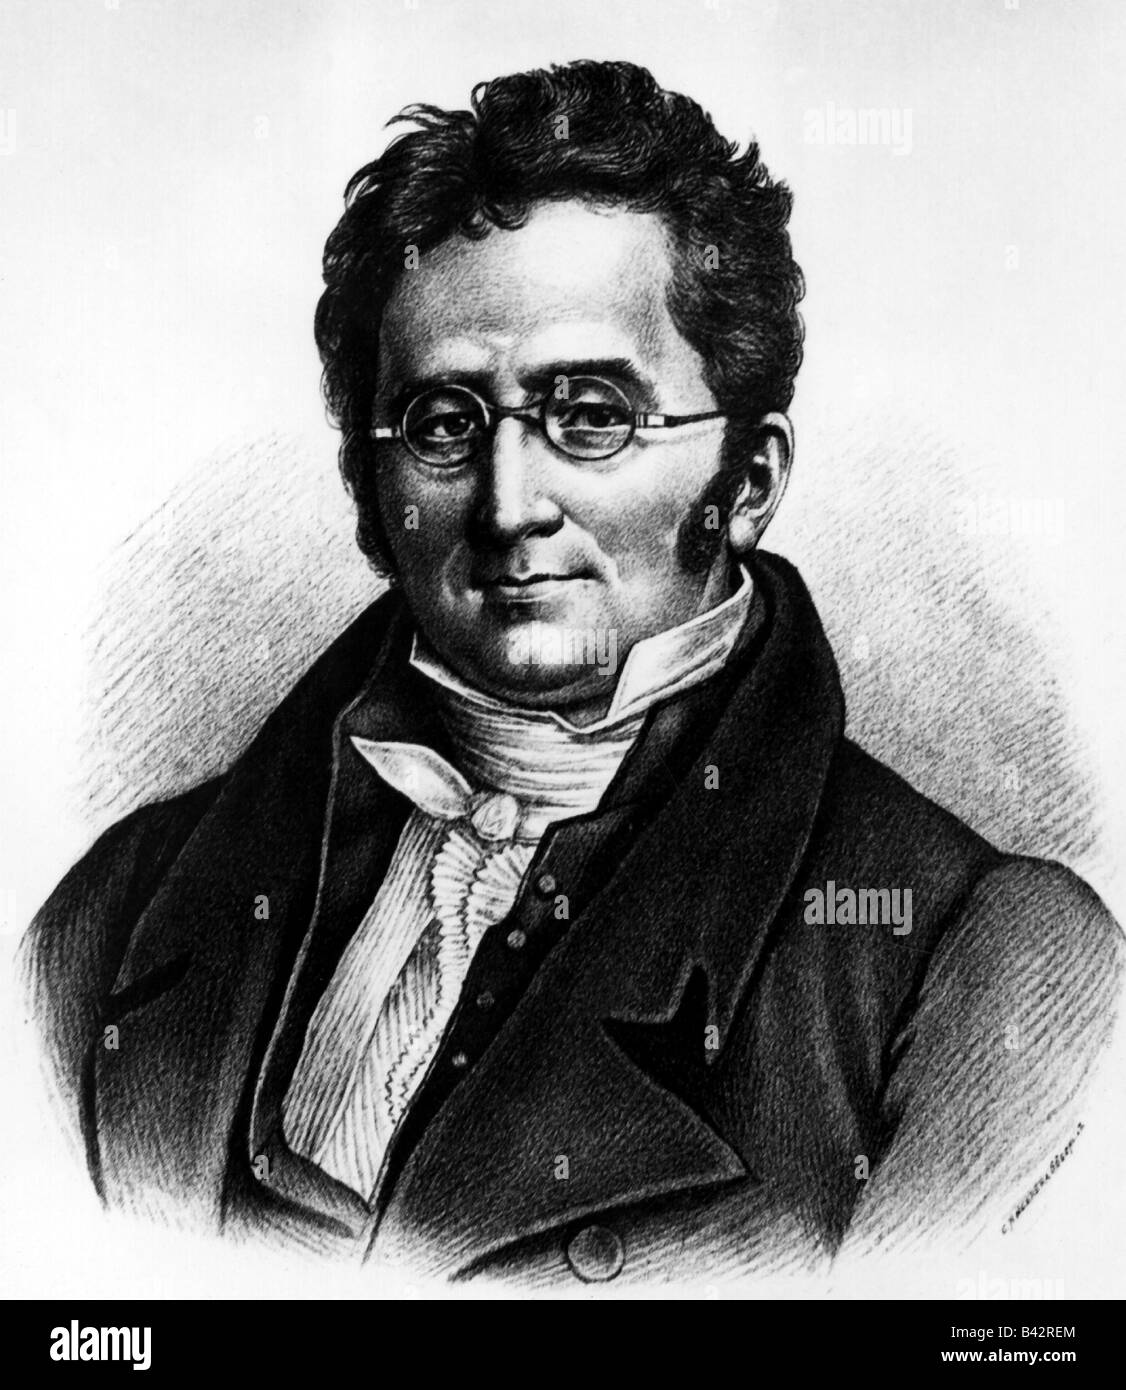 Candolle, Augustin Pyrame de, 4.2.1778 - 9.9.1841, Swiss botanist, portrait, lithograph, 19th century, Stock Photo